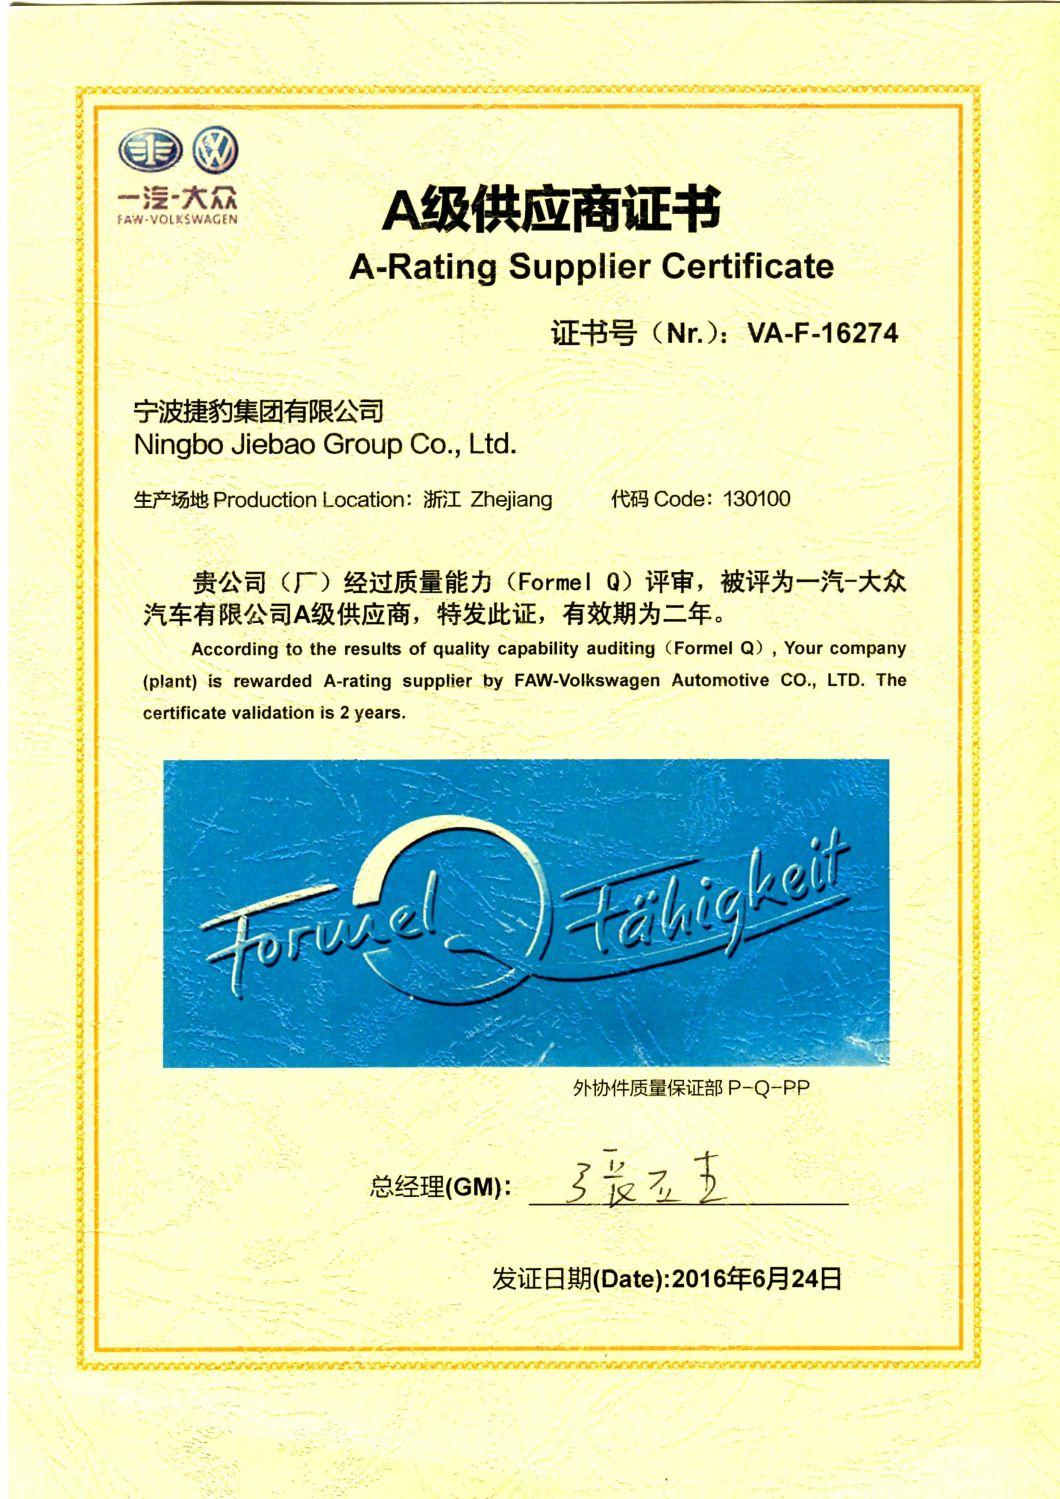 GM Belt Maker - Jiebao OEM Transmission Parts Fan Automotive Textile Garment Packaging Agricultural Machinery Htd3m Toothed Belt